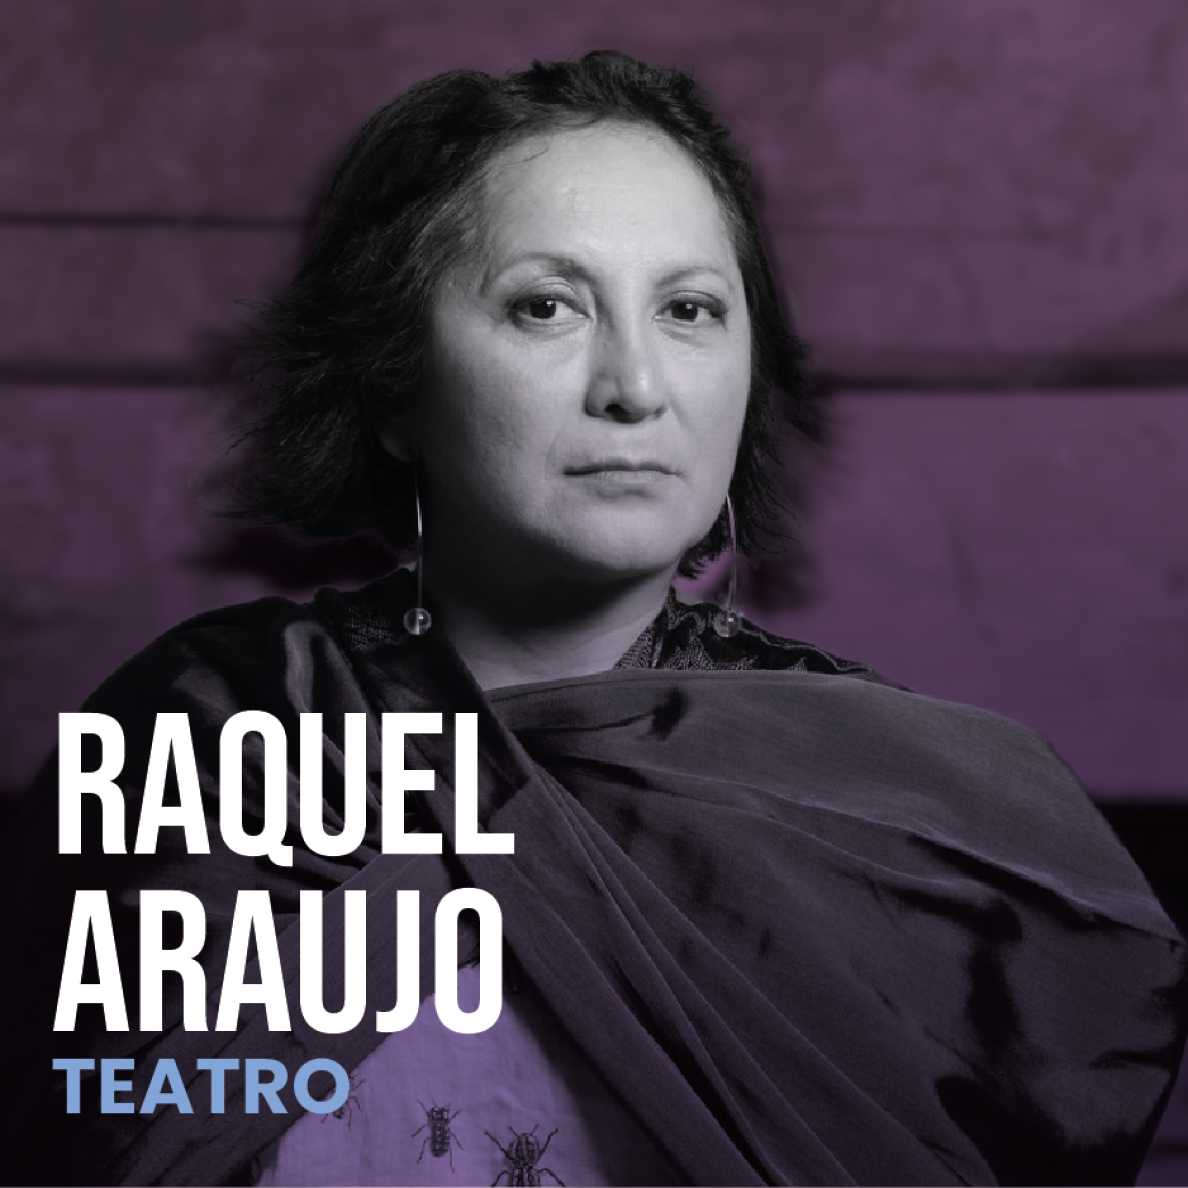 Raquel Araujo